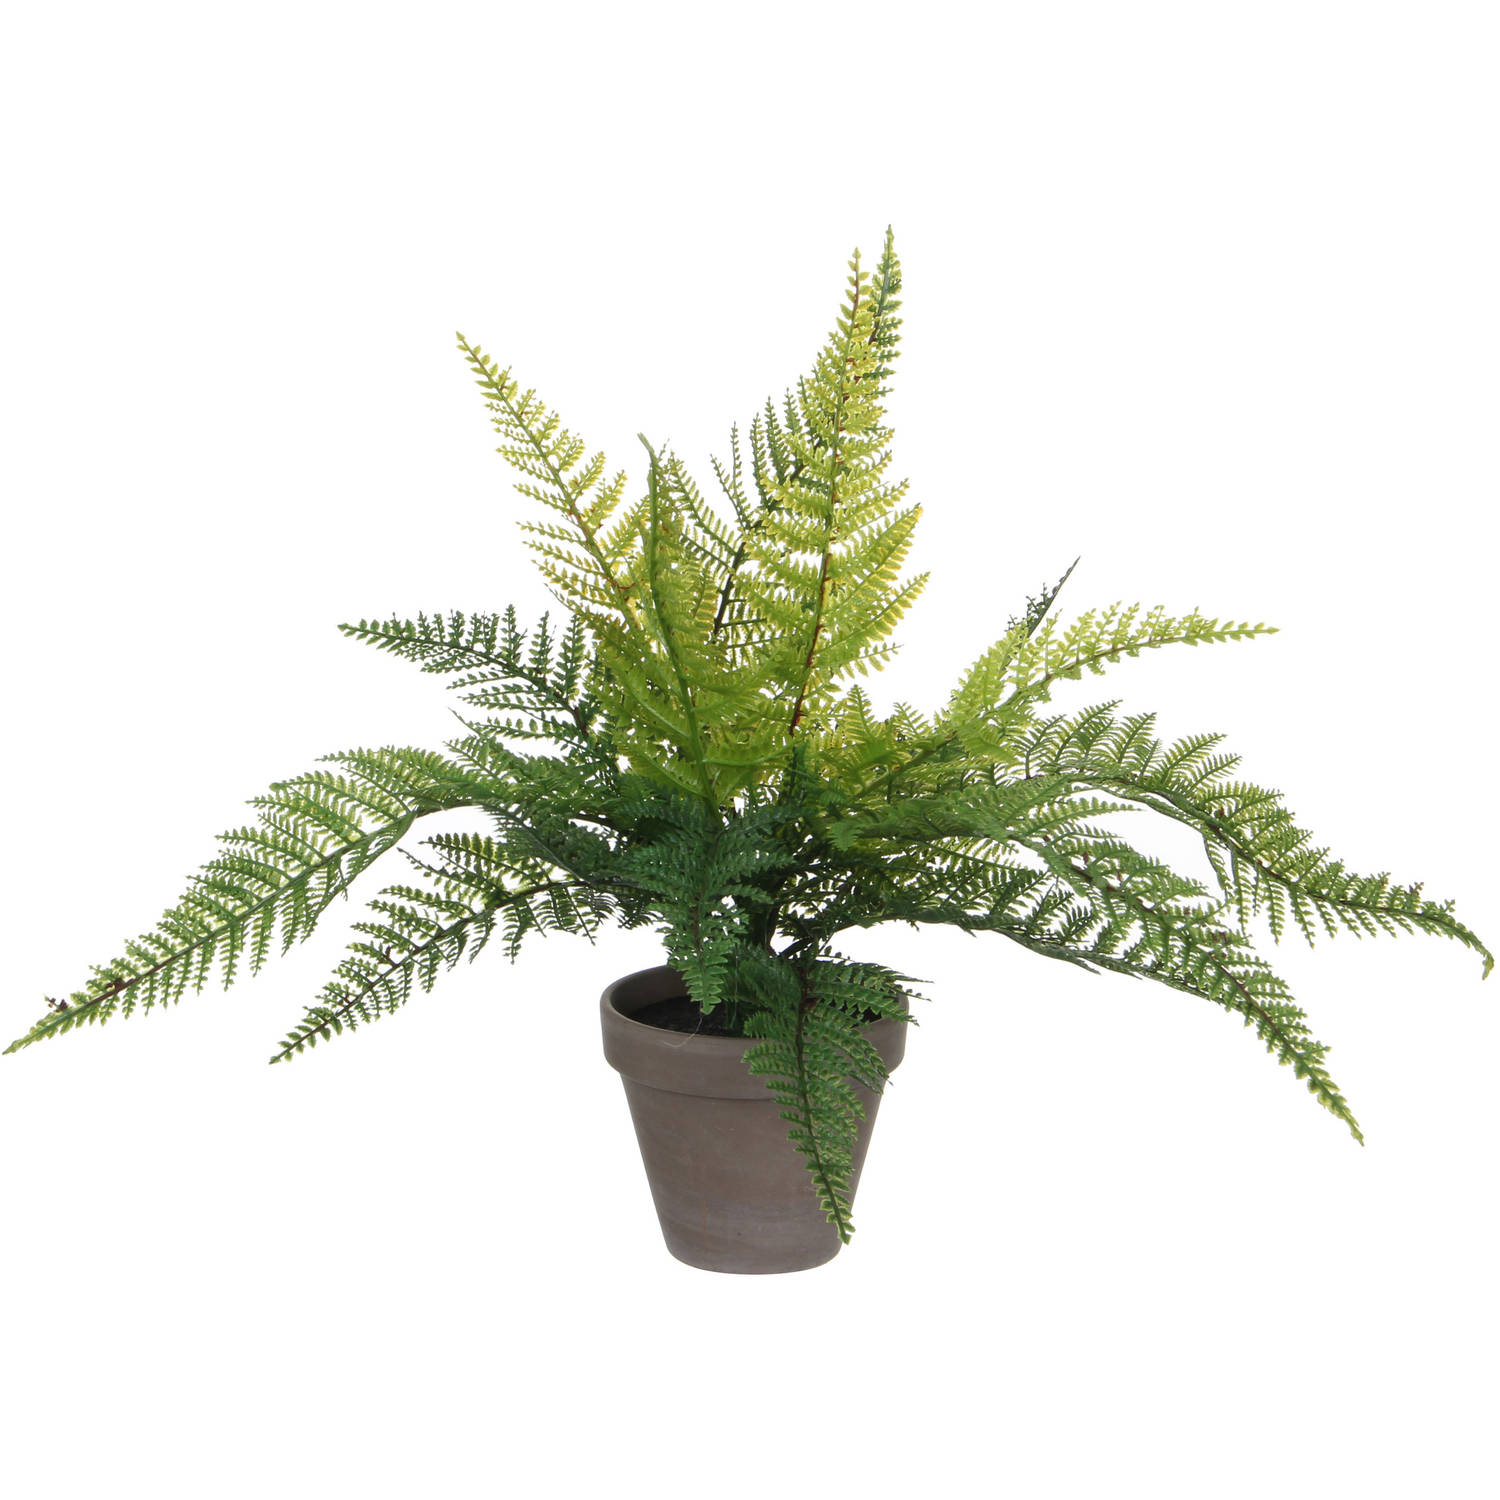 Tegenhanger Niet doen Onbemand Varen kunstplant/kamerplant groen H40 cm x D36 cm - Kunstplanten | Blokker